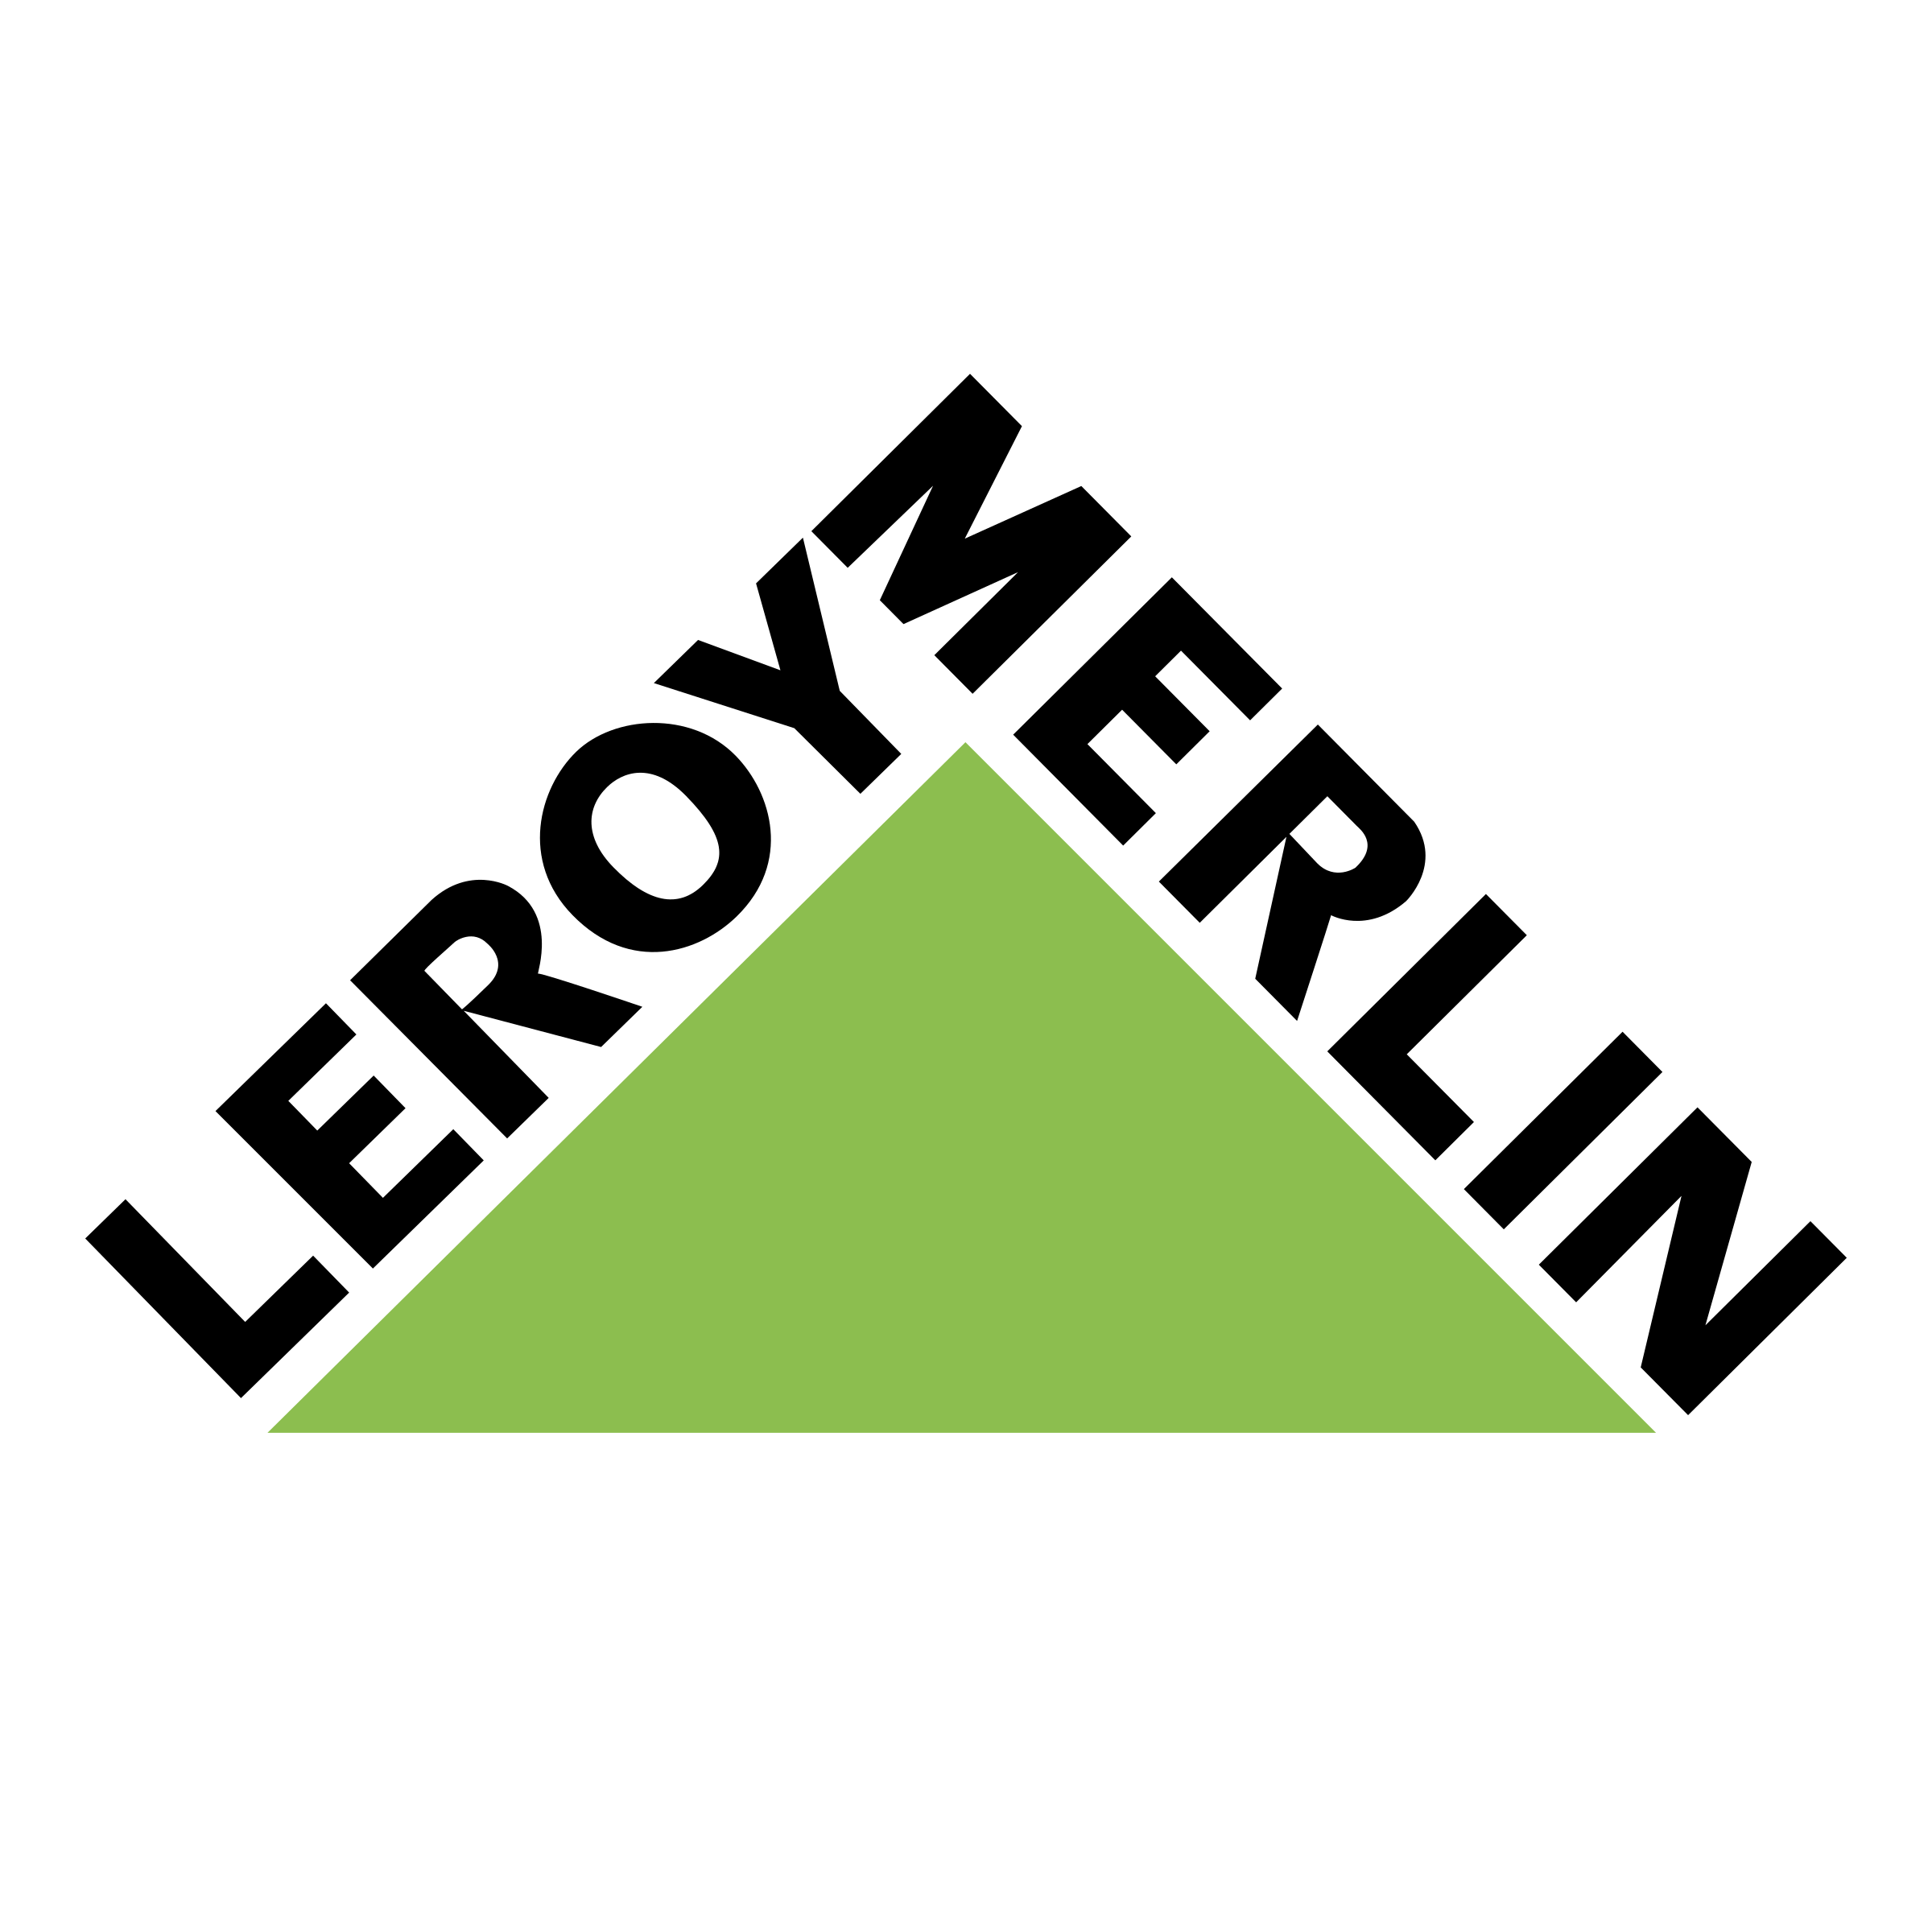 Leroy Logo - Leroy Merlin Logo PNG Transparent & SVG Vector - Freebie Supply